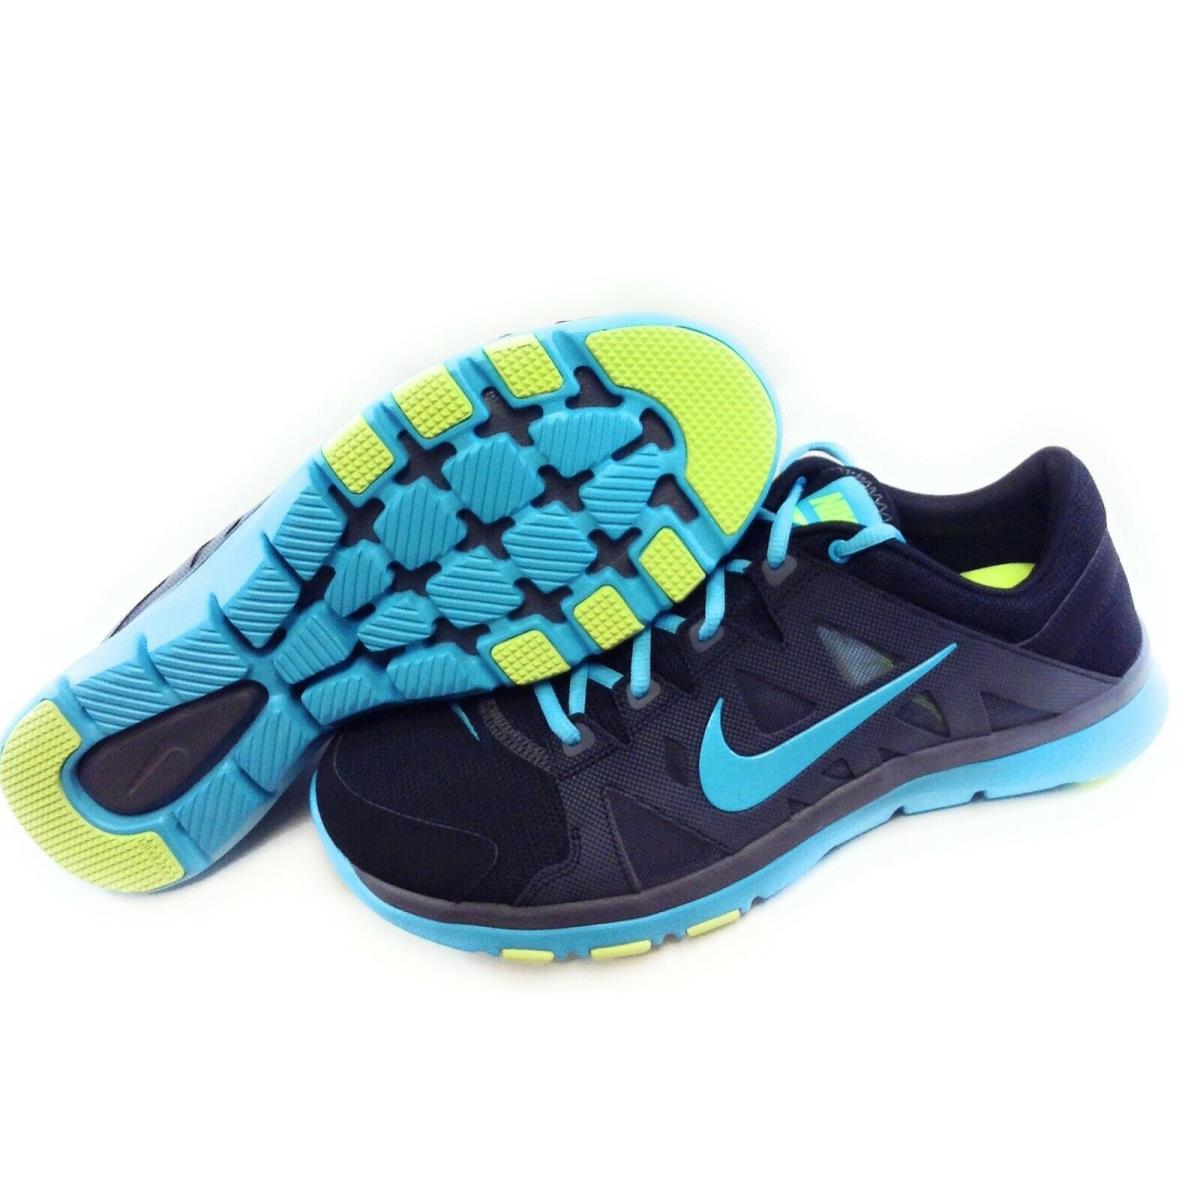 Womens Nike Flex Supreme Trainer 2 Black Gamma Blue 2014 DS Sneakers Shoes - Black